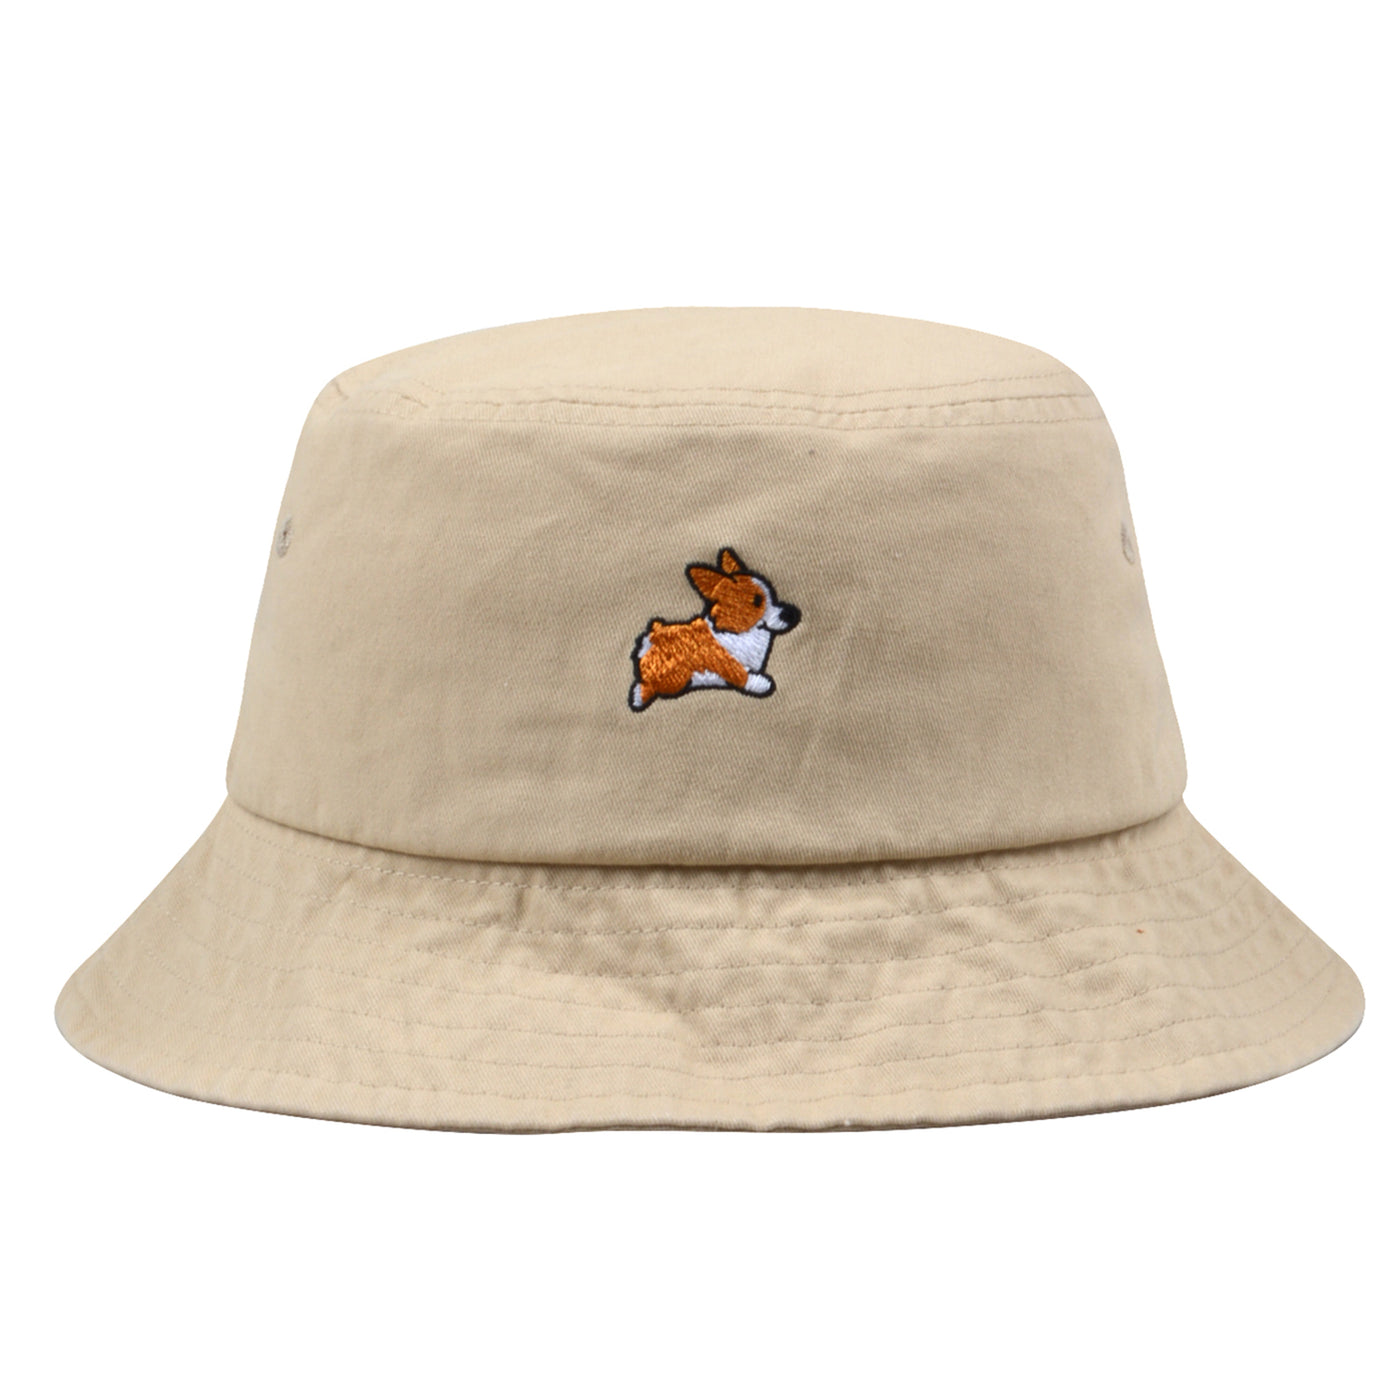 Hatphile Corgi Embroidery Bucket Hat